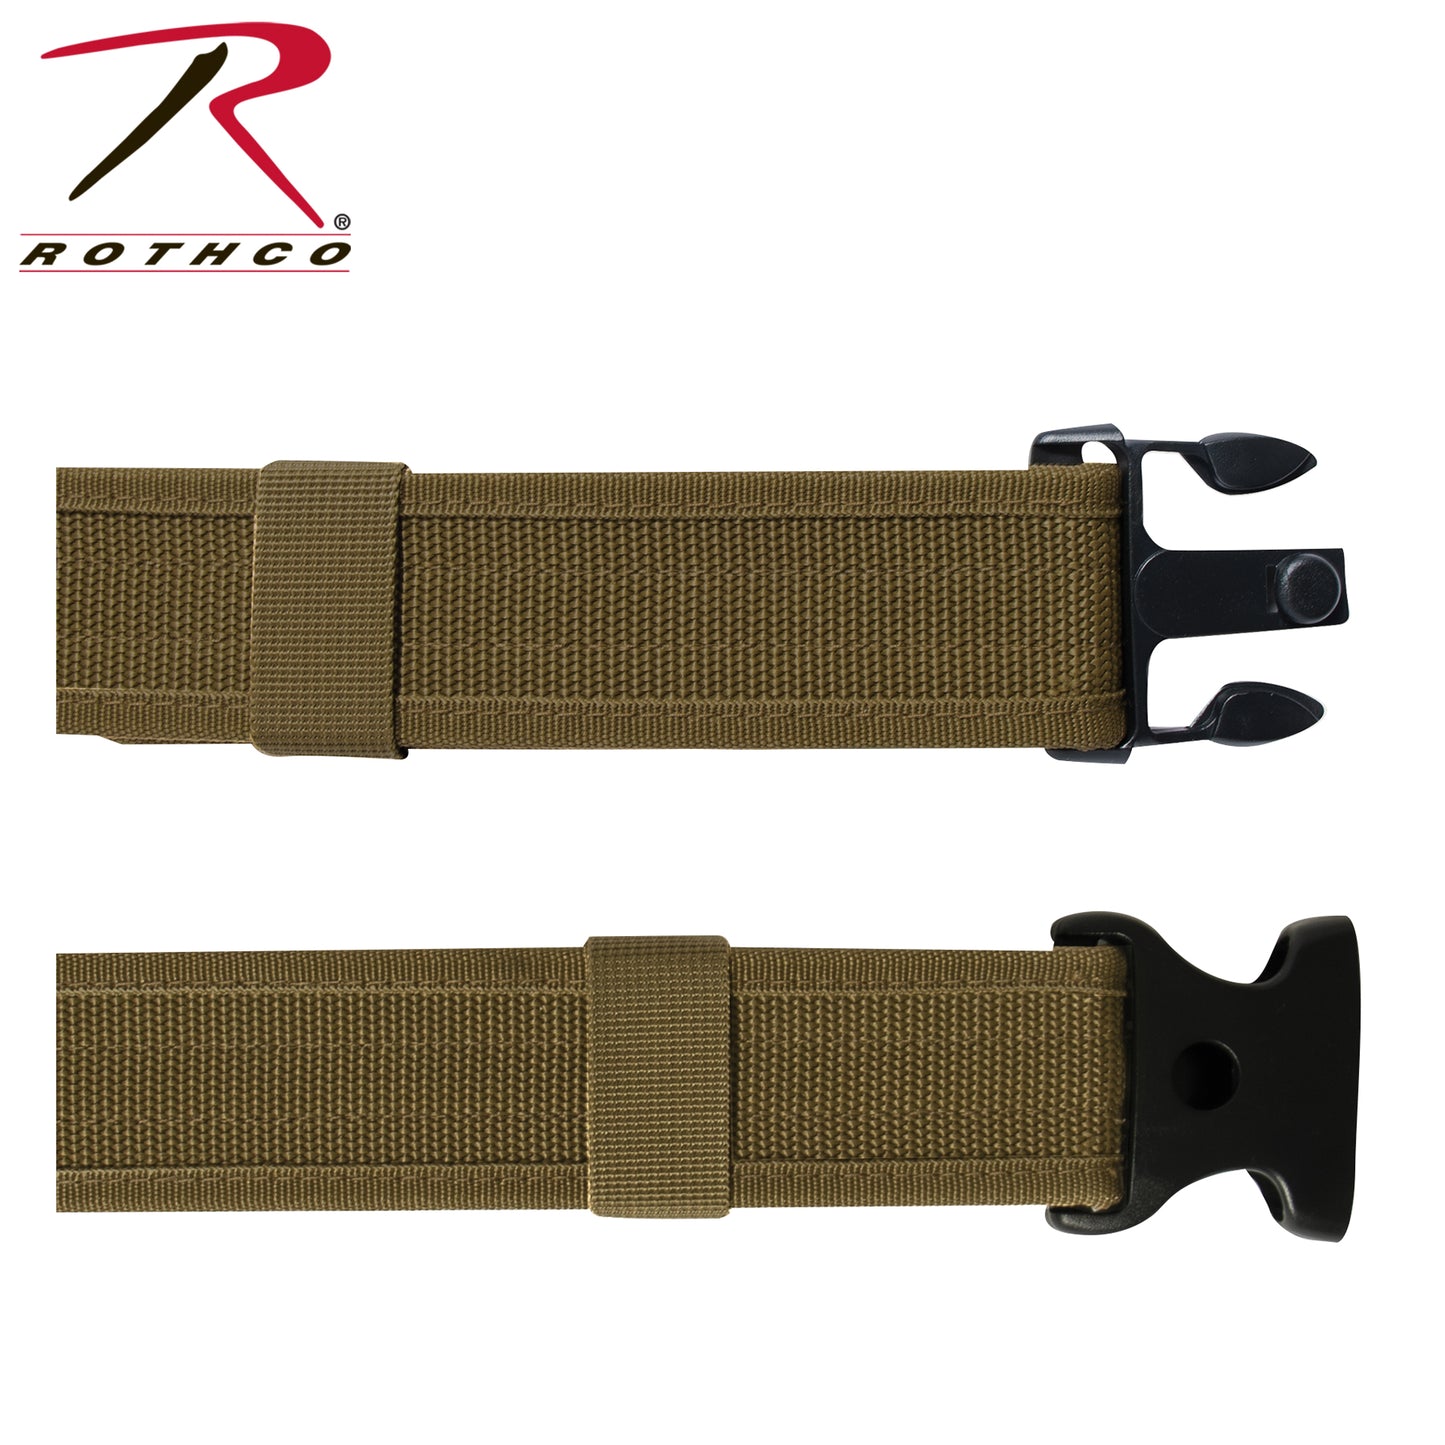 Rothco Deluxe Triple Retention Duty Belt